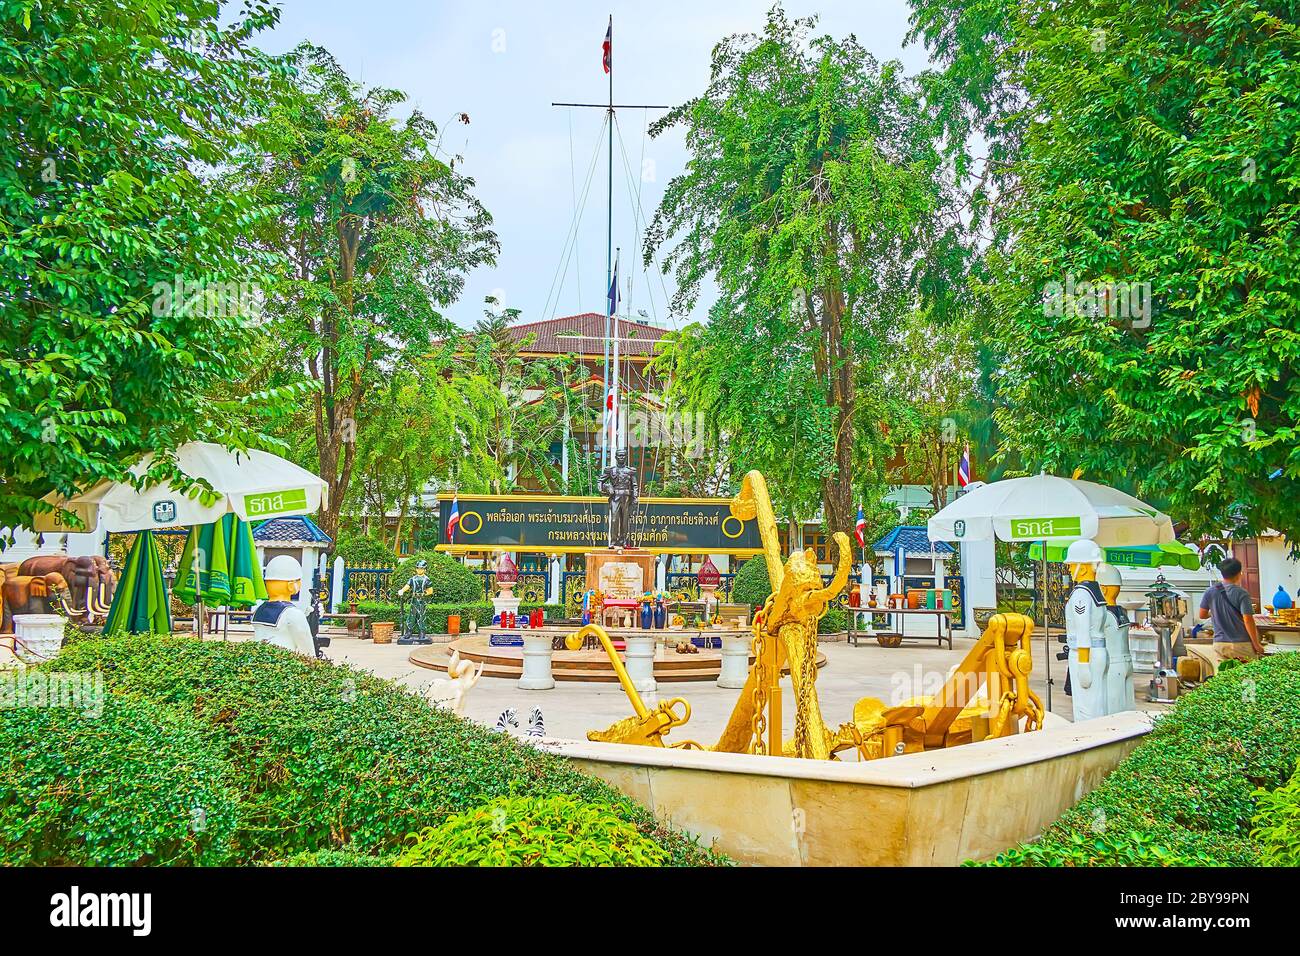 BANGKOK, THAILAND - MAY 13, 2019: Prince Admiral Chumphon Khet Udomsak Shrine with monument, sail, gilt anchors and sailors, located next to Rajamanga Stock Photo